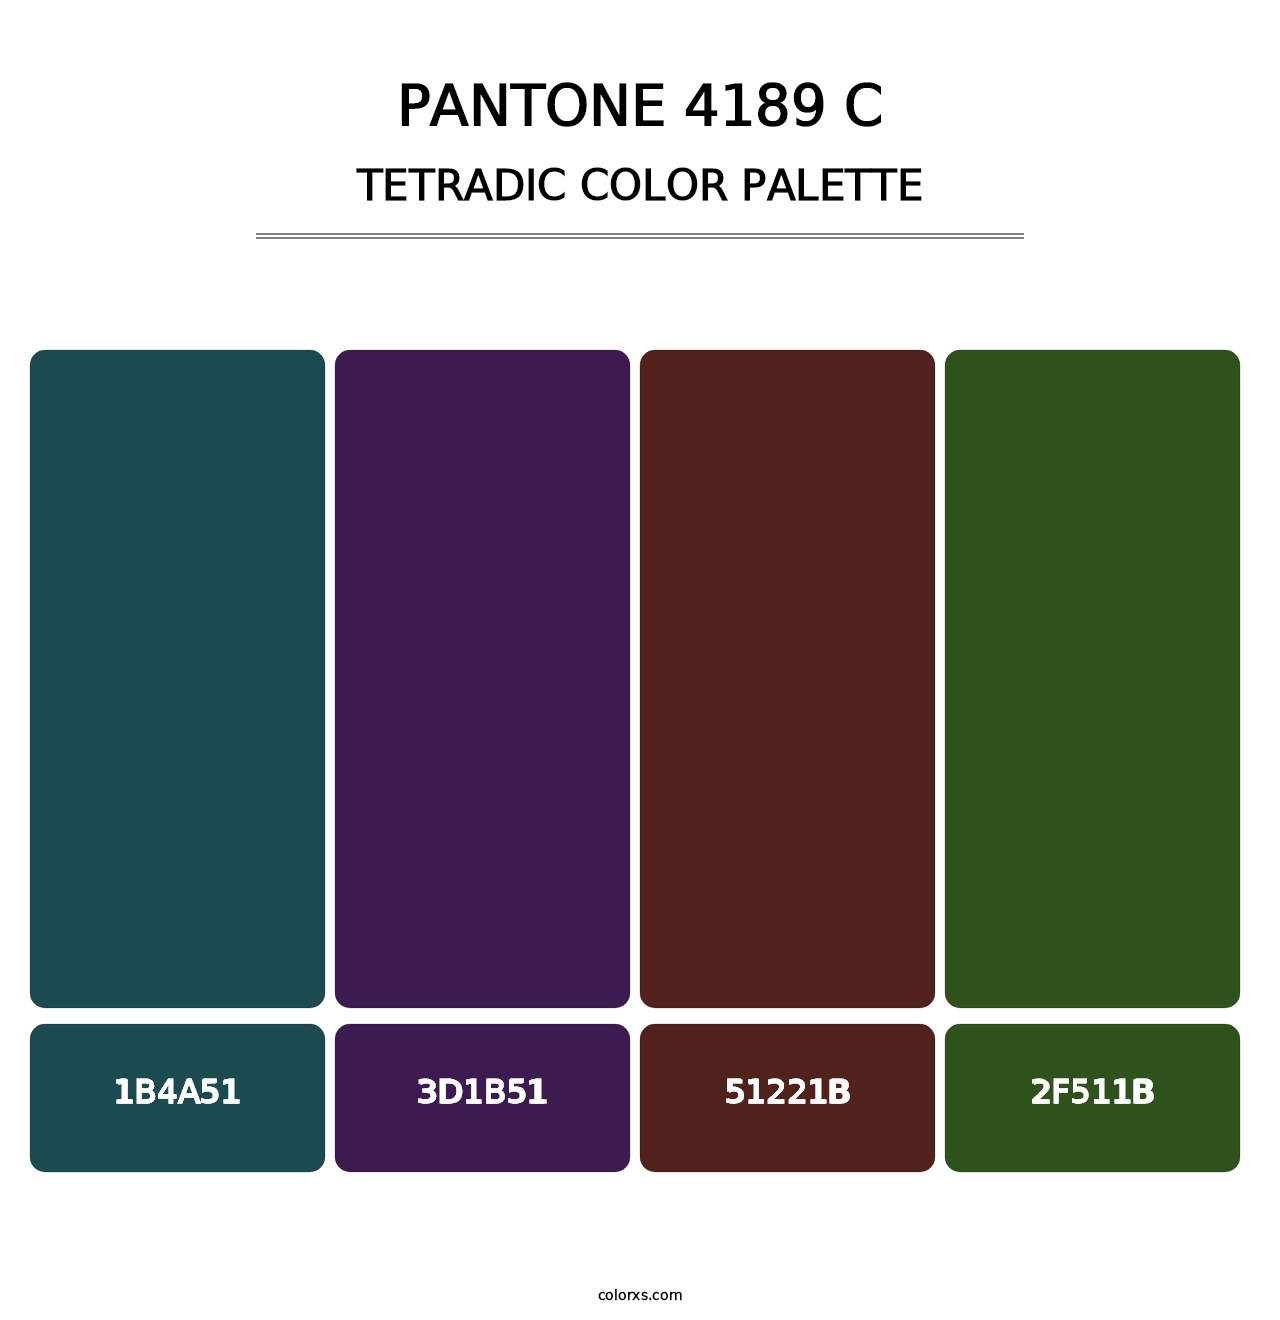 PANTONE 4189 C - Tetradic Color Palette